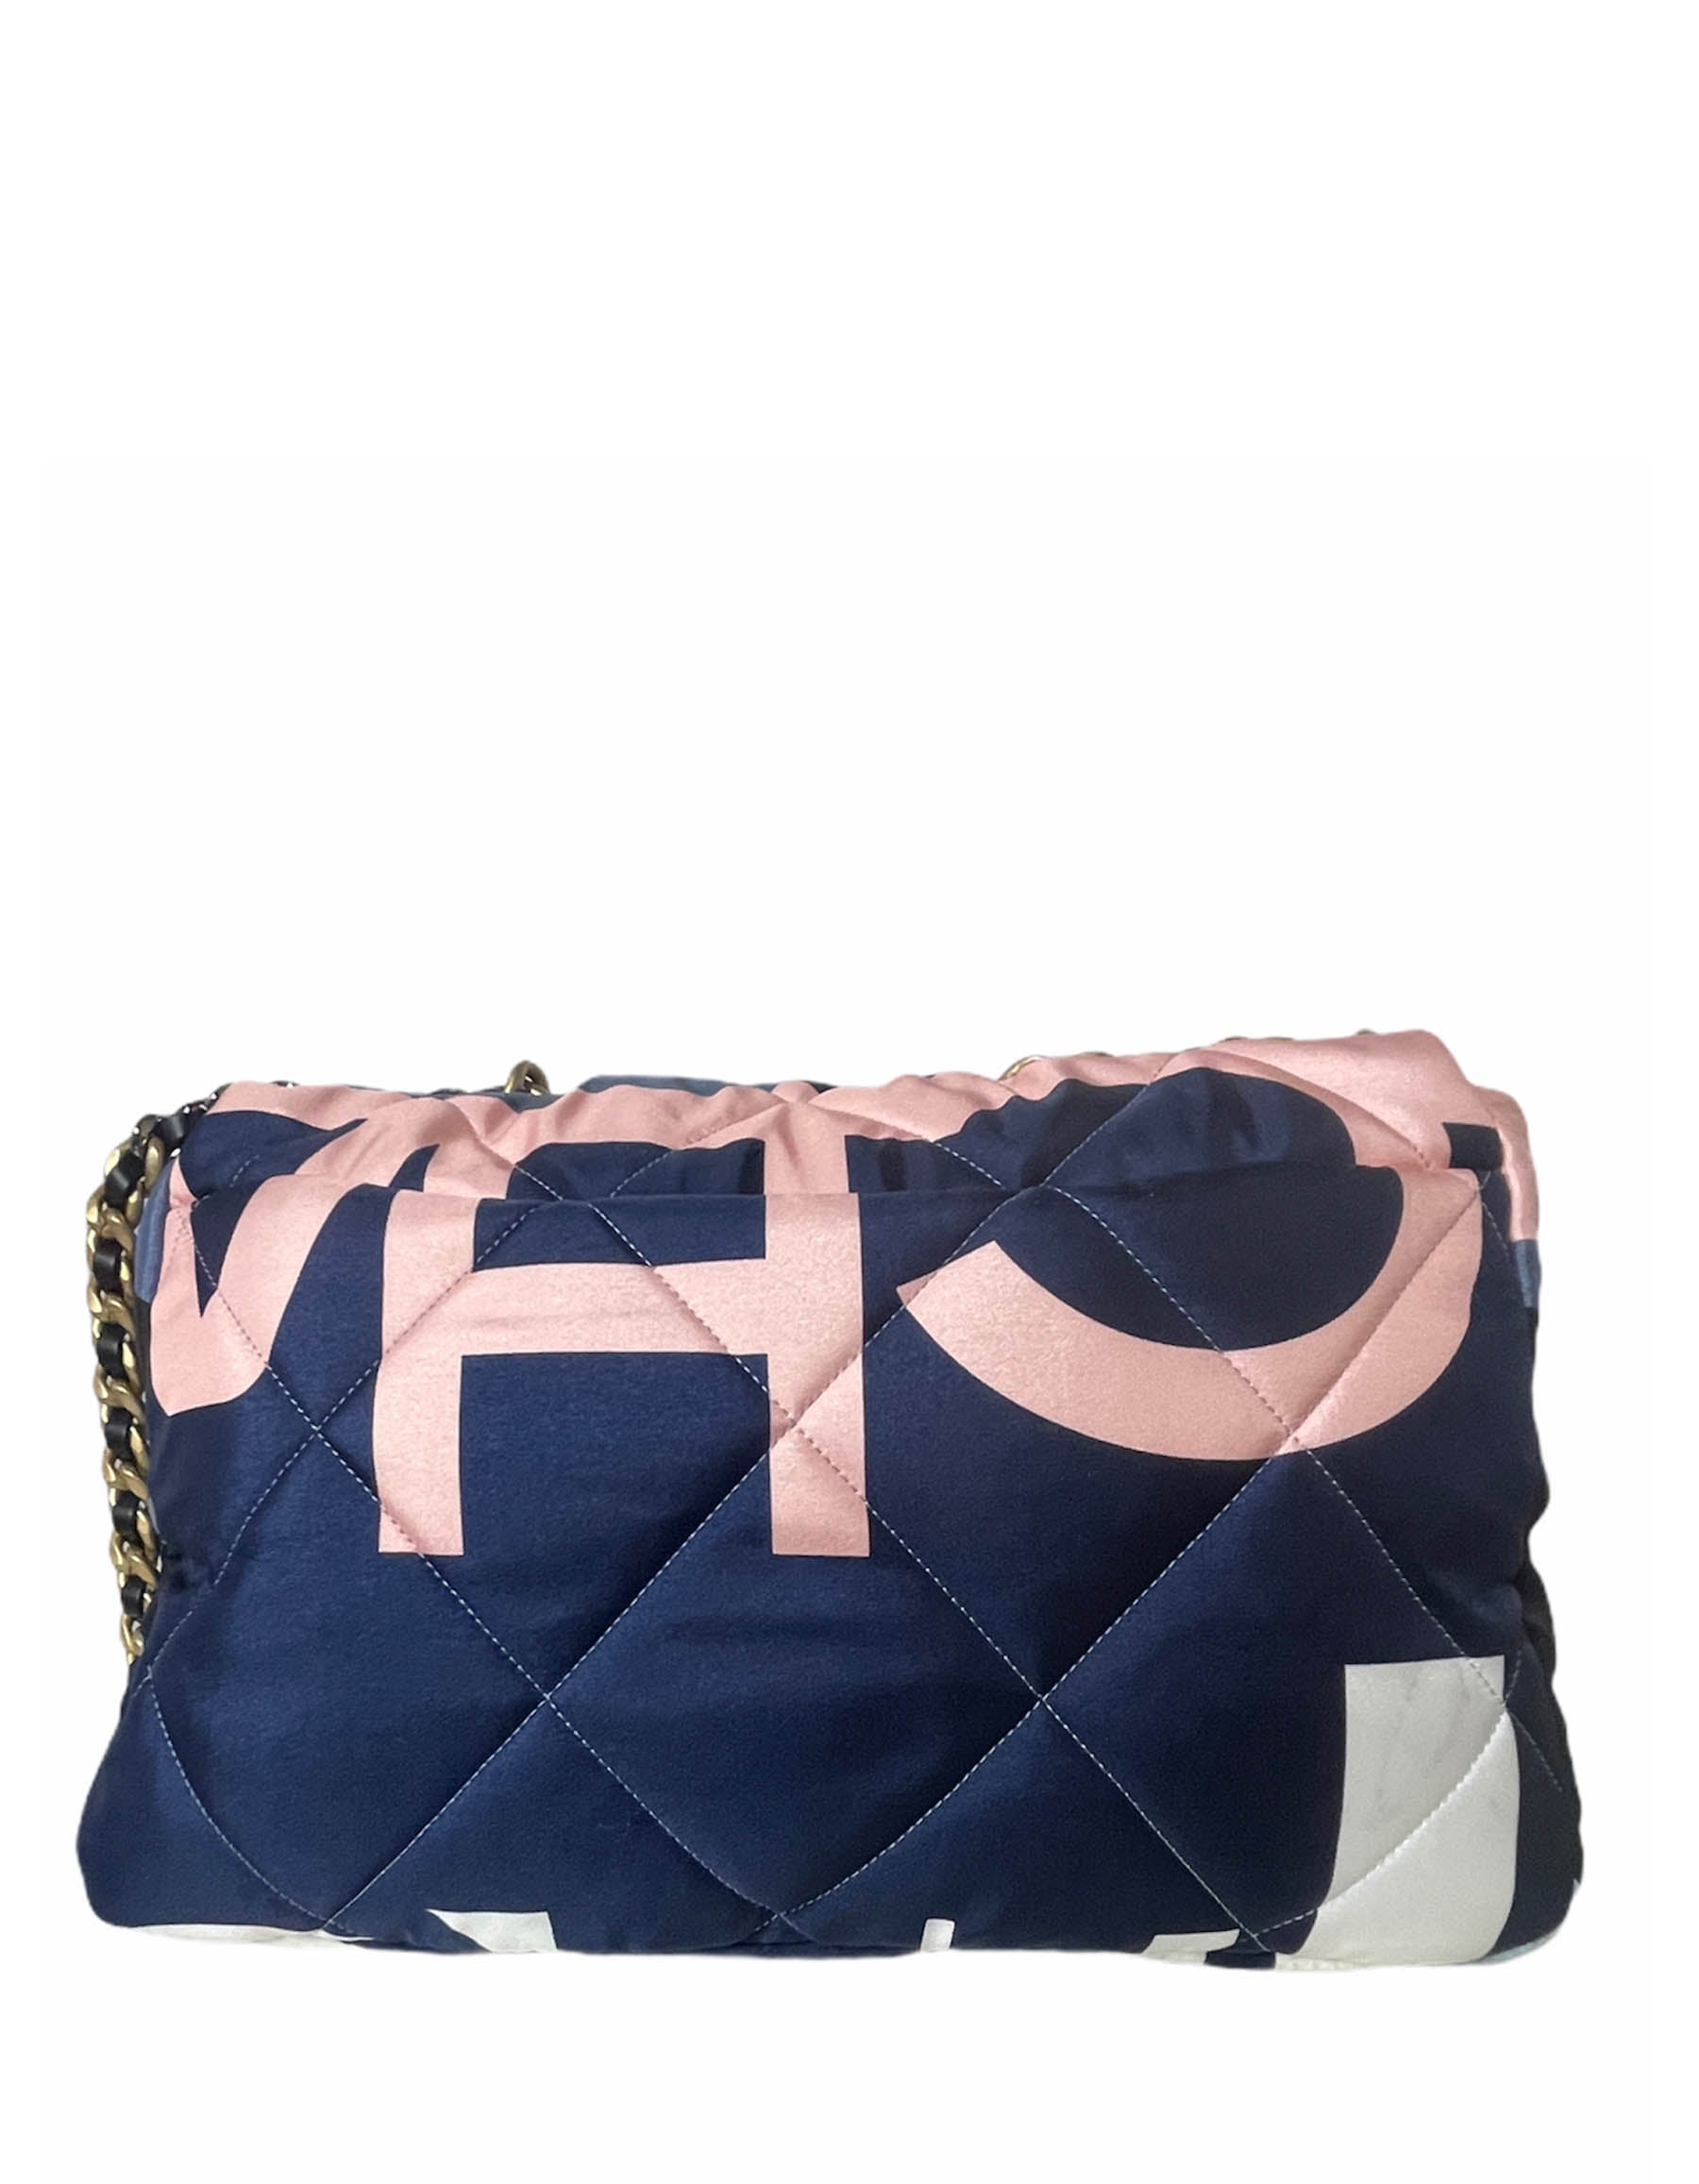 Chanel Blue/White/Black Maxi Scarf Chanel 19 Flap Bag